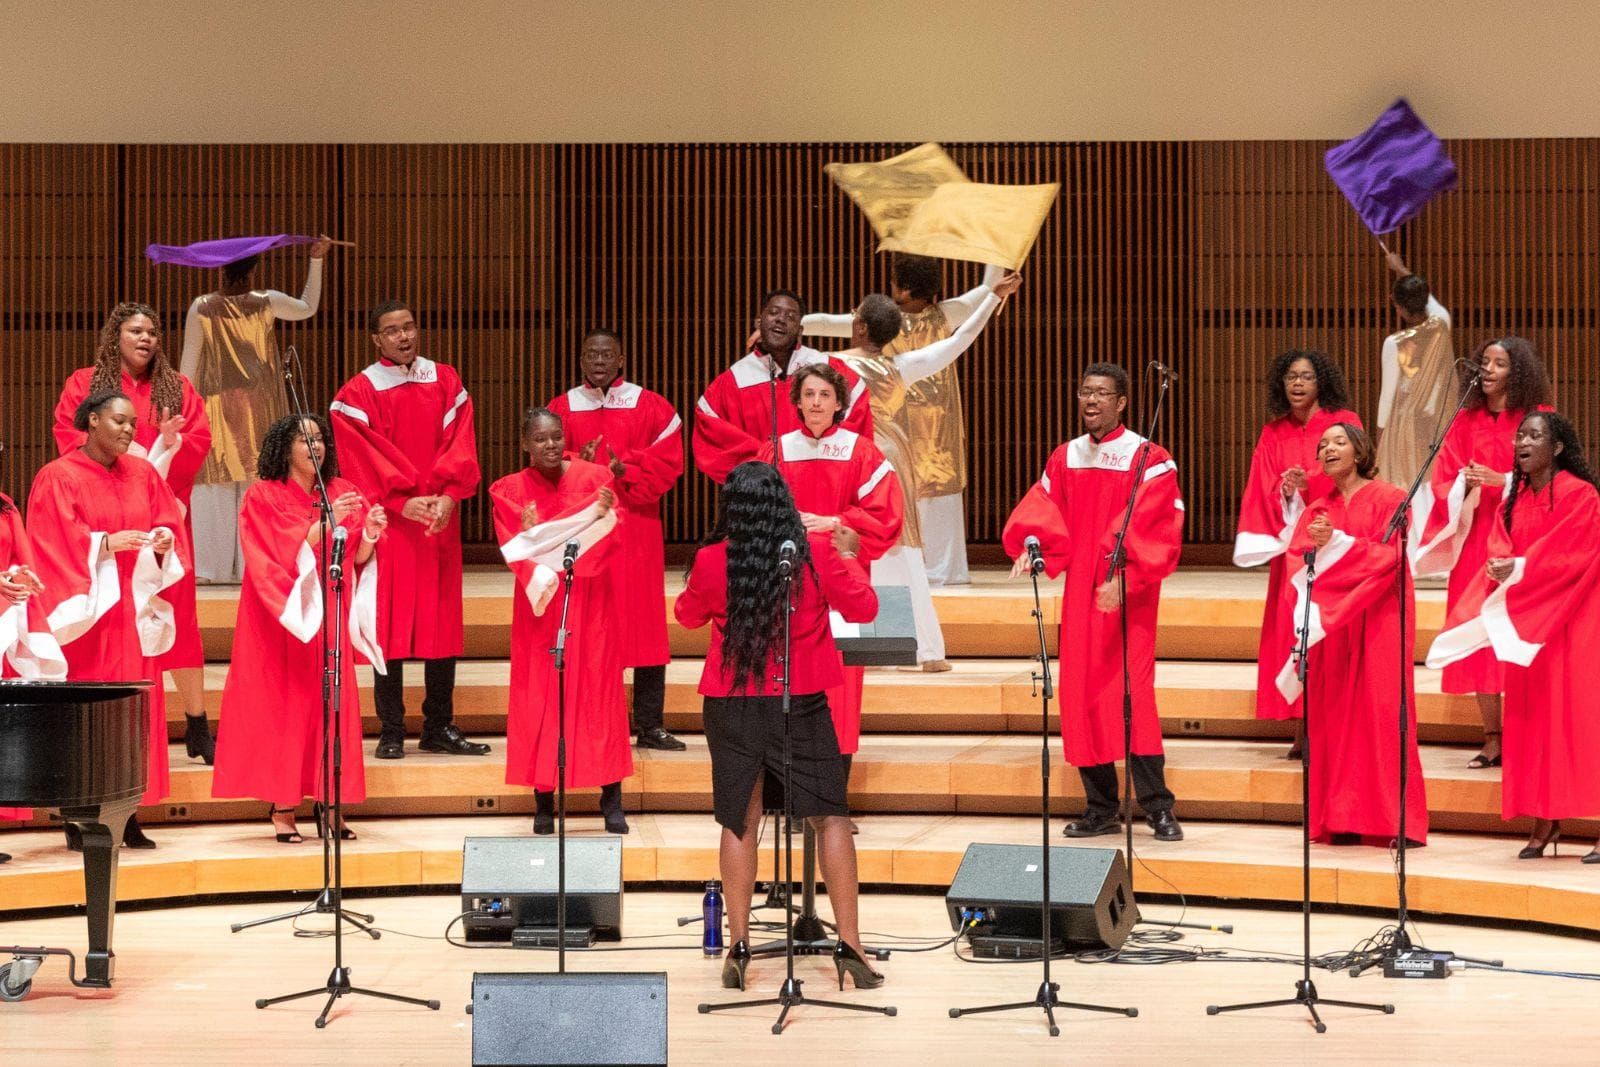 Gospel choir members wearing red robes perform in a concert hall.